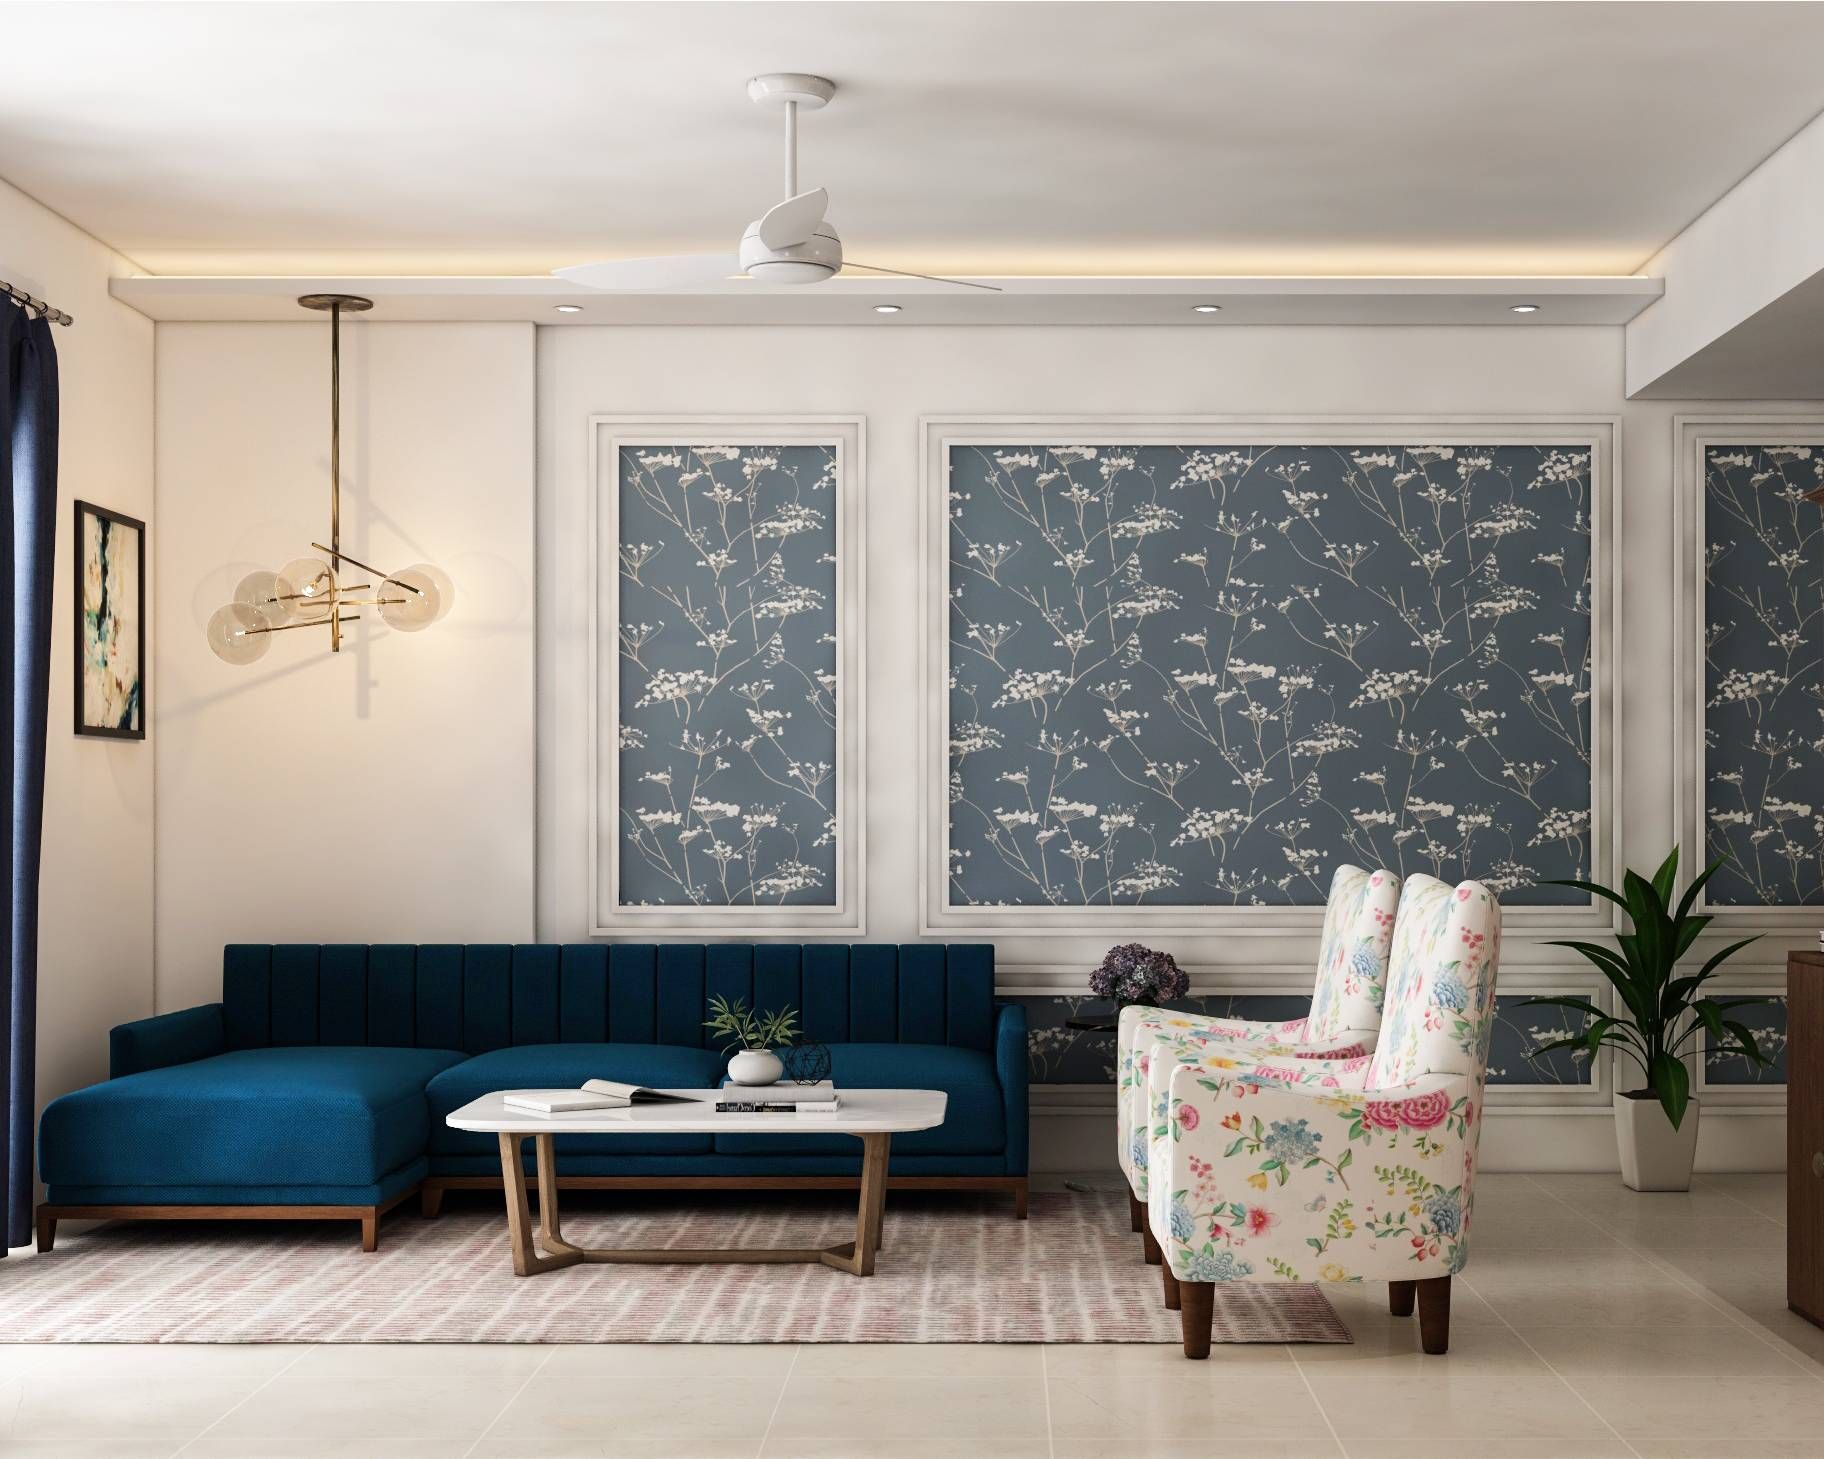 Modern Living Room Design With Floral Patterns